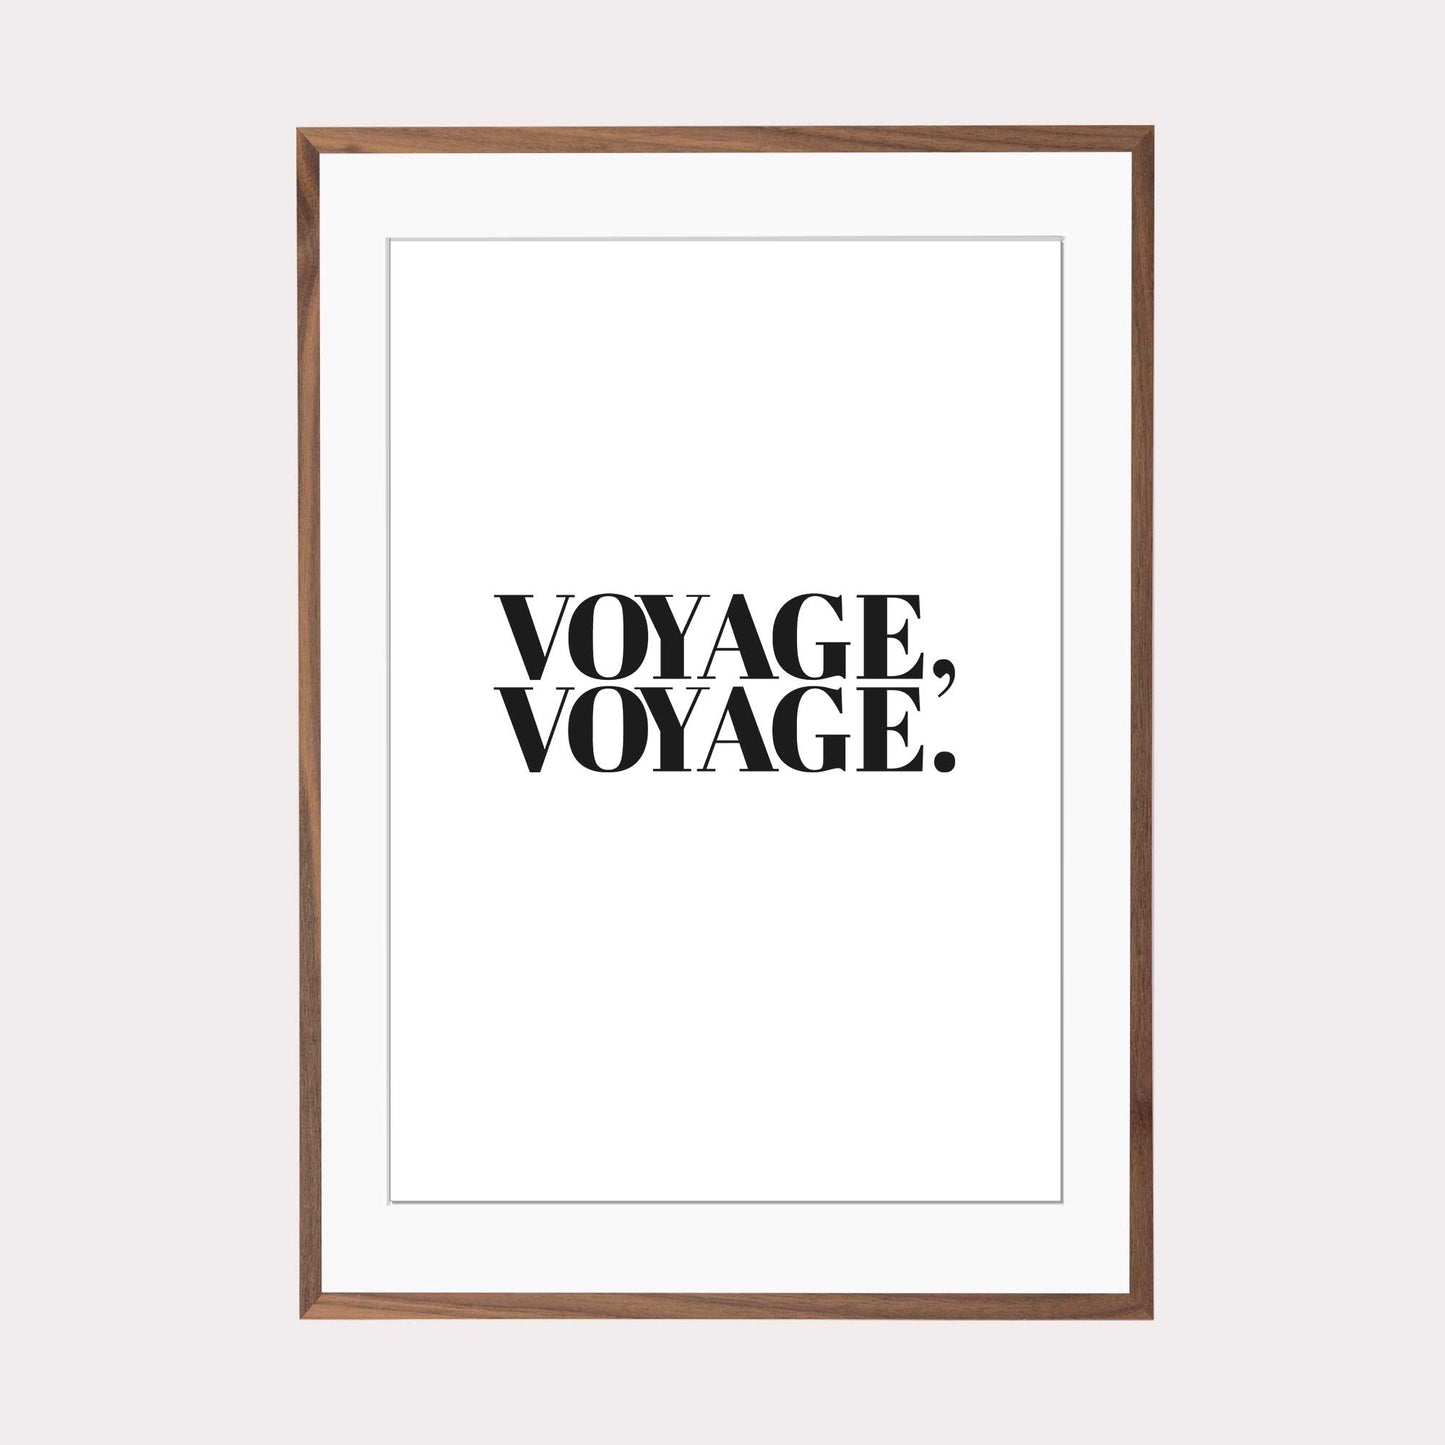 Art Print |  Voyage, Voyage.